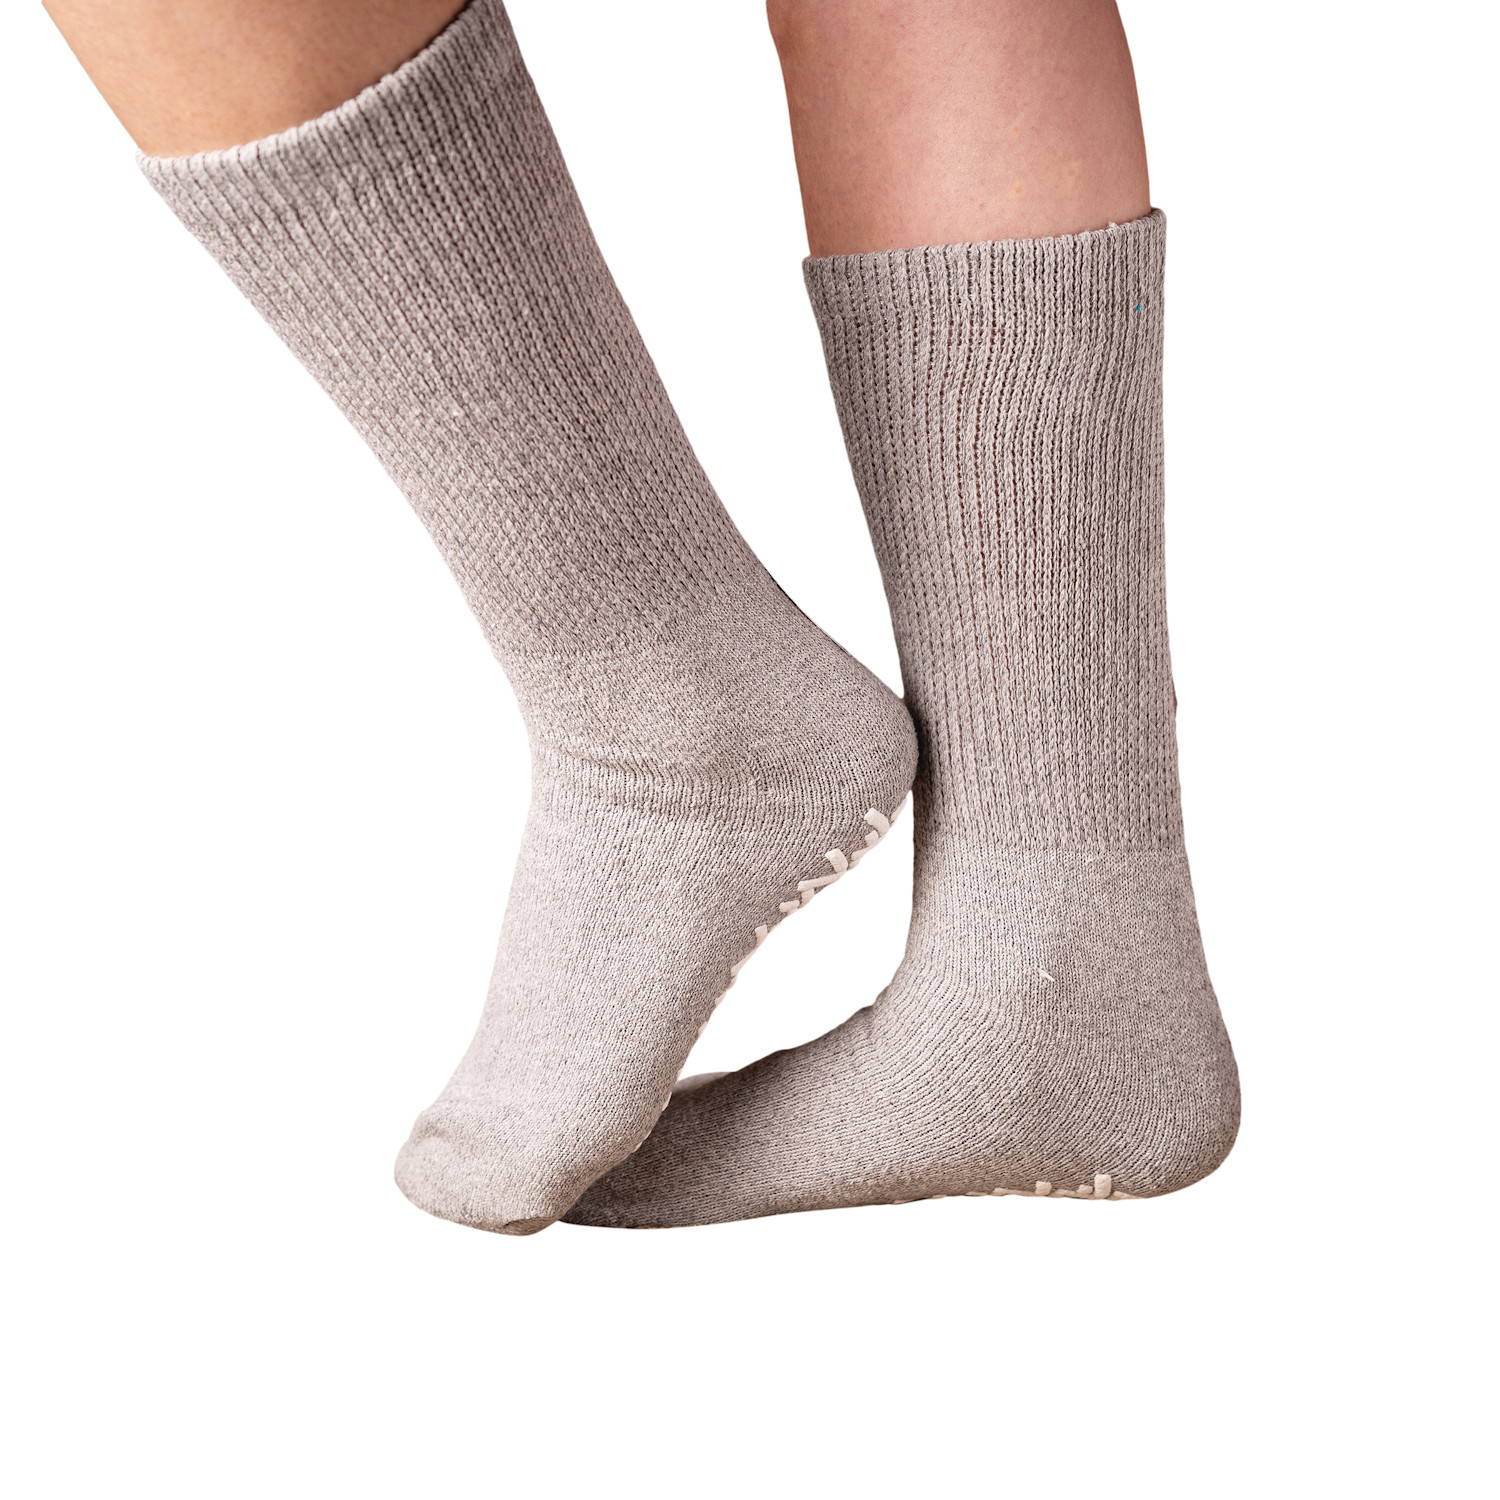 Unisex Diabetic Crew Length Non-Skid Socks | Support Plus